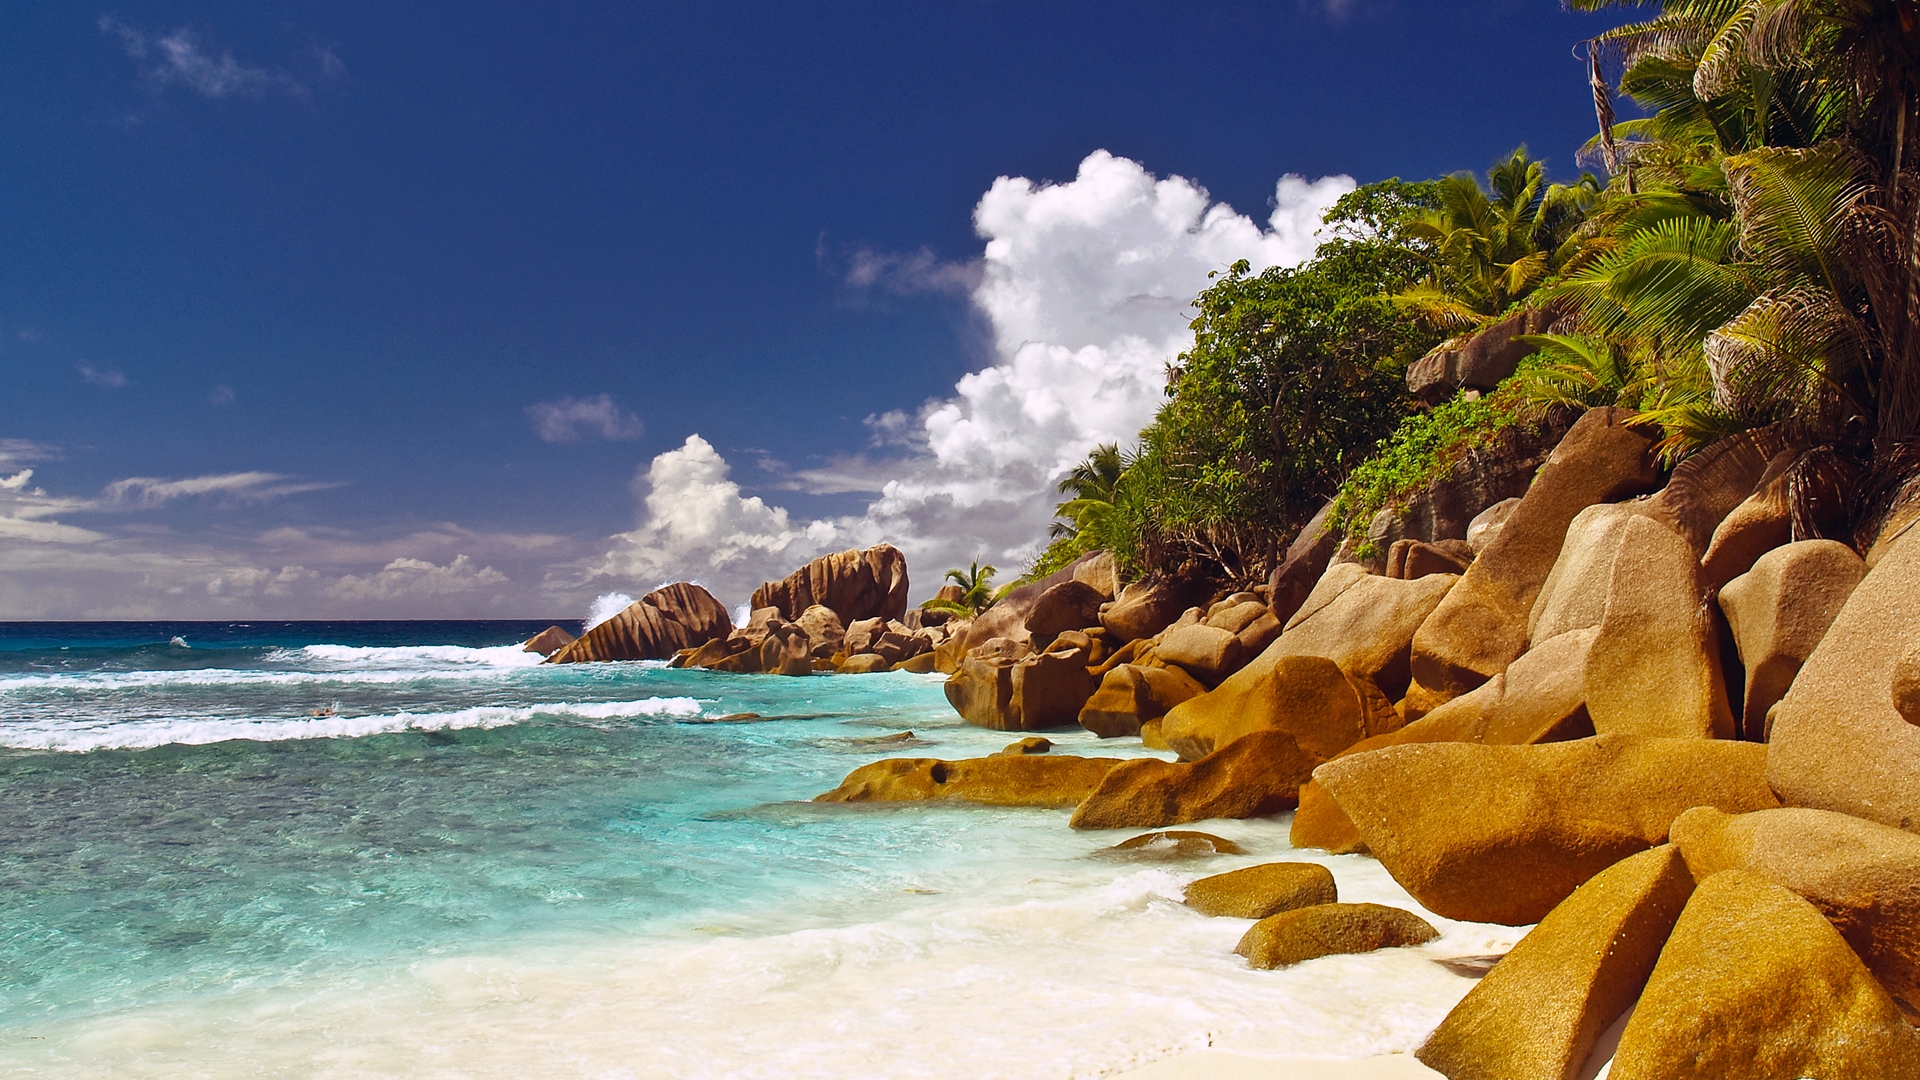 Seychelles Islands Corner for 1920 x 1080 HDTV 1080p resolution